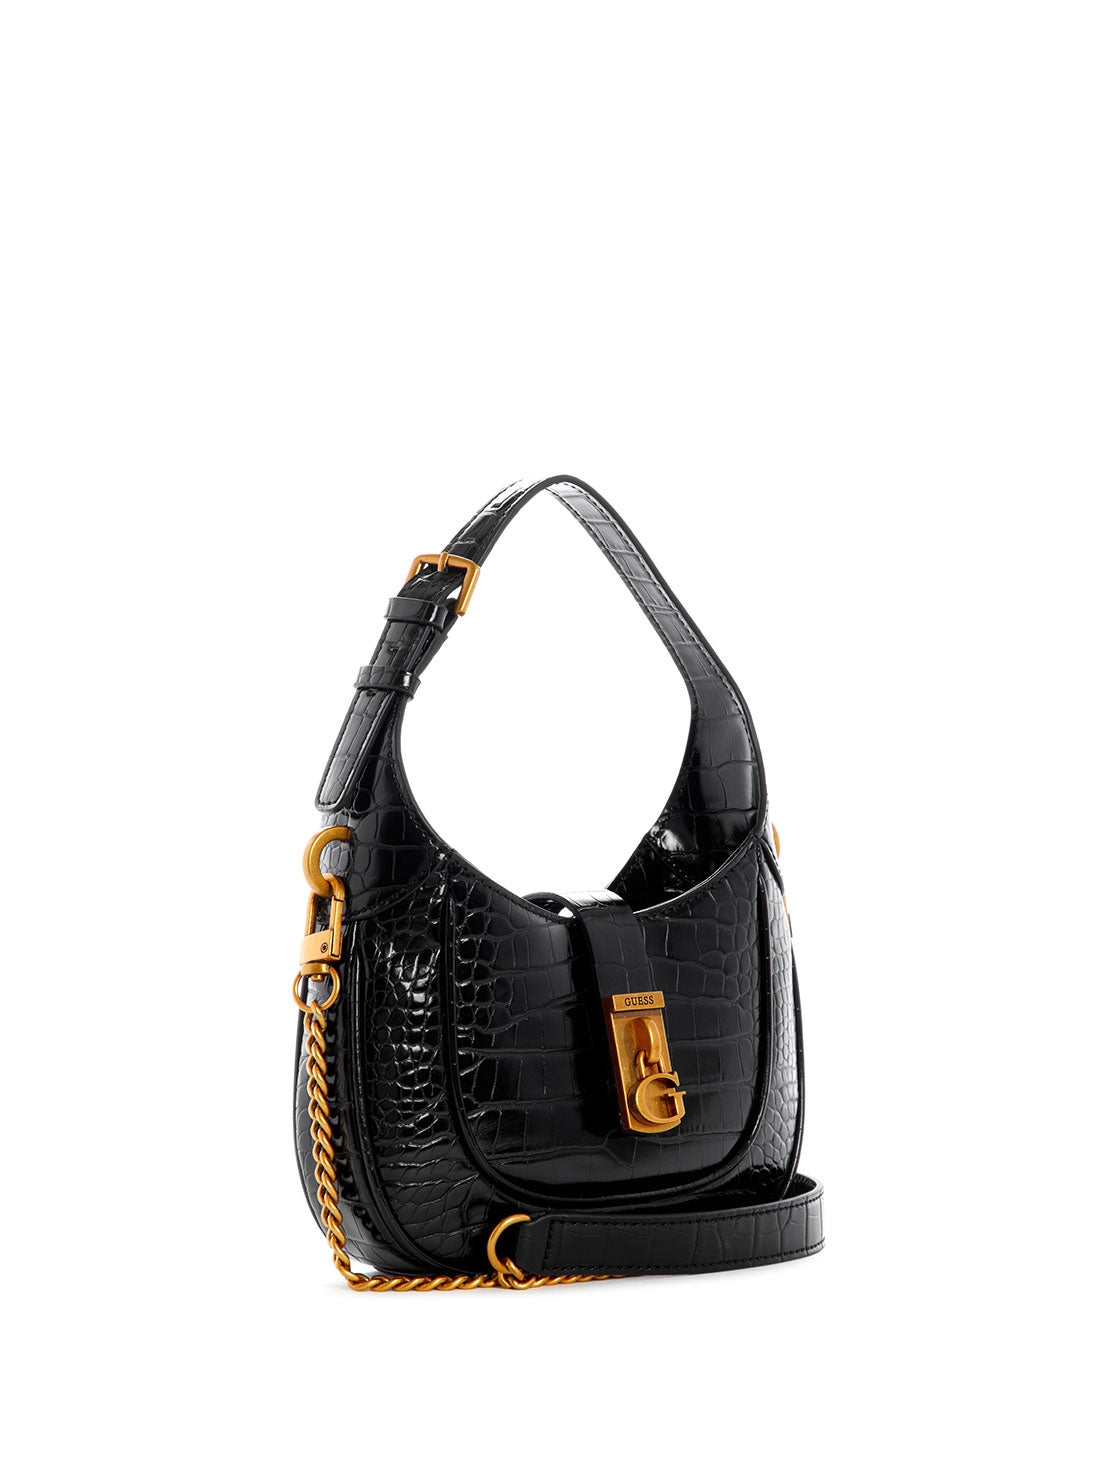 GUESS Women's Black Croco Maimie Mini Hobo Bag CB840977 Front Side View